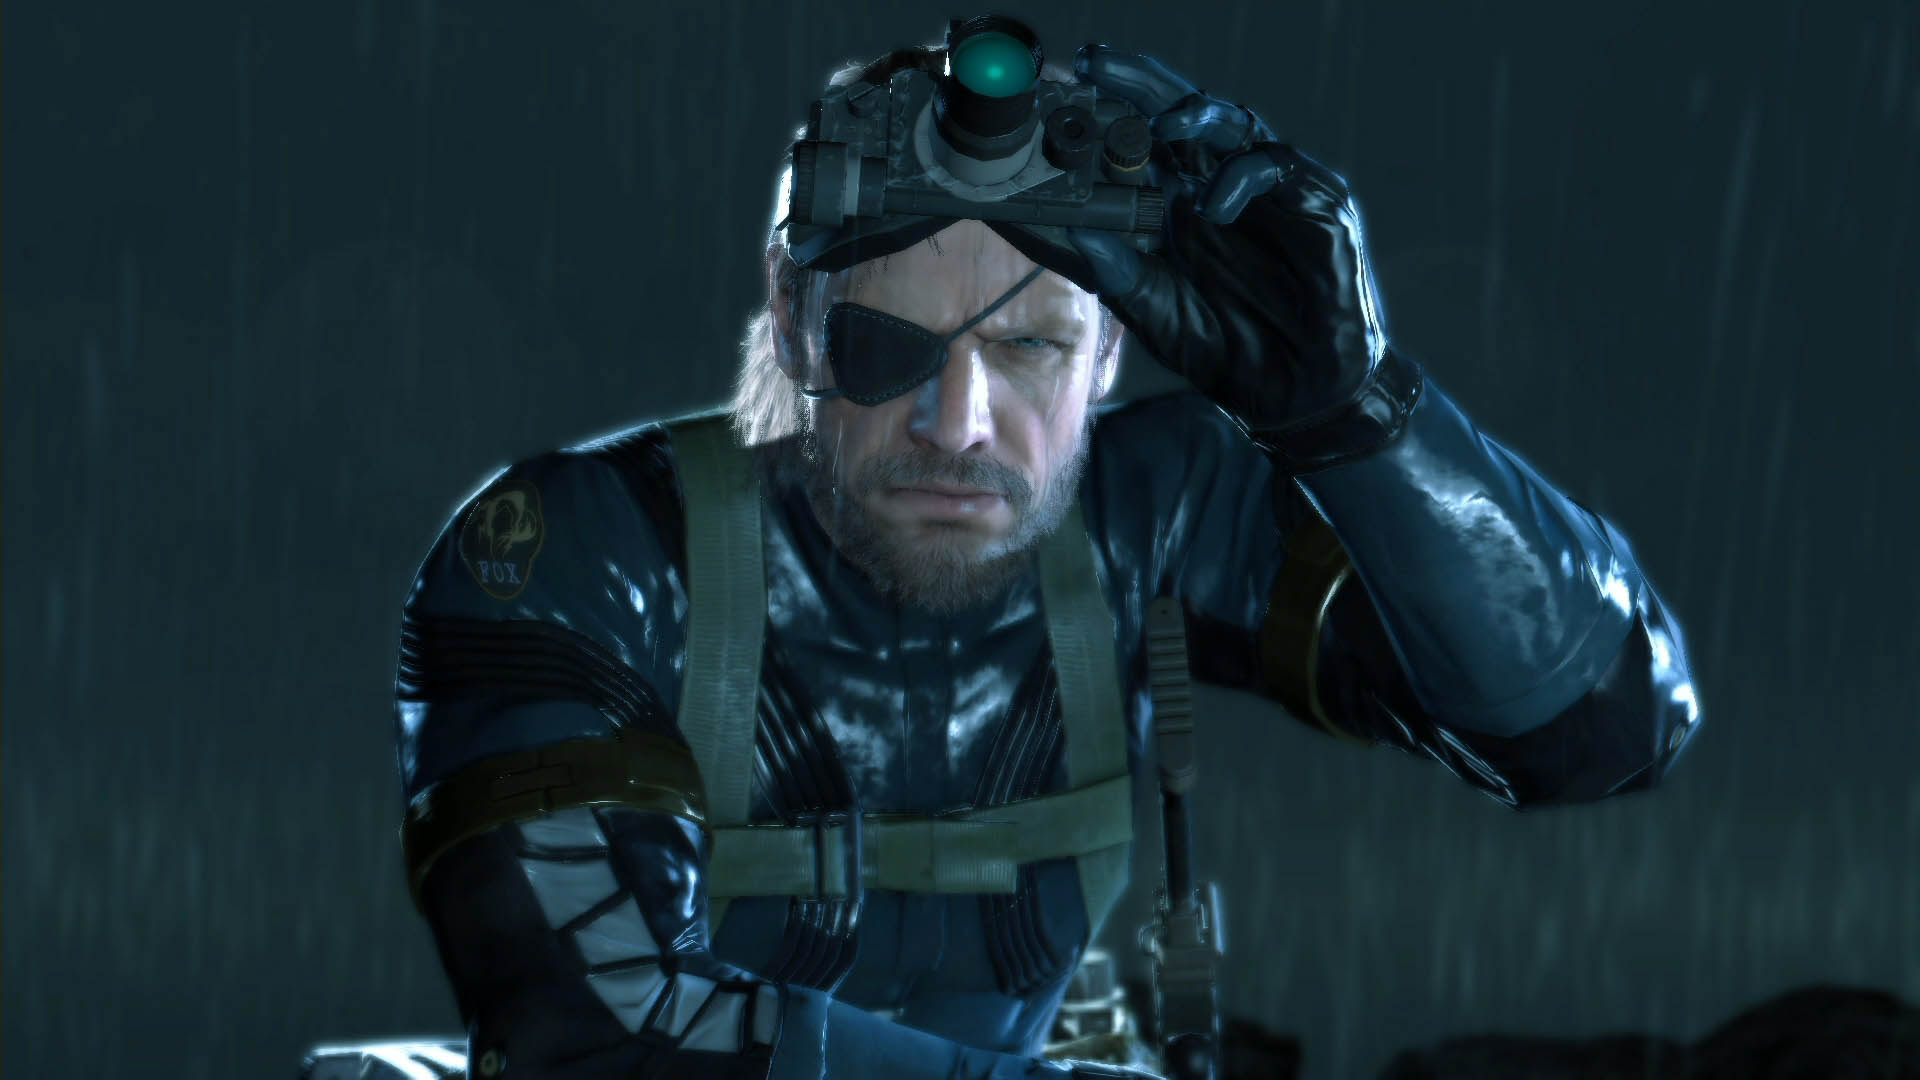 Big Boss (Venom Snake) with Night Vision Goggles - Metal Gear ...